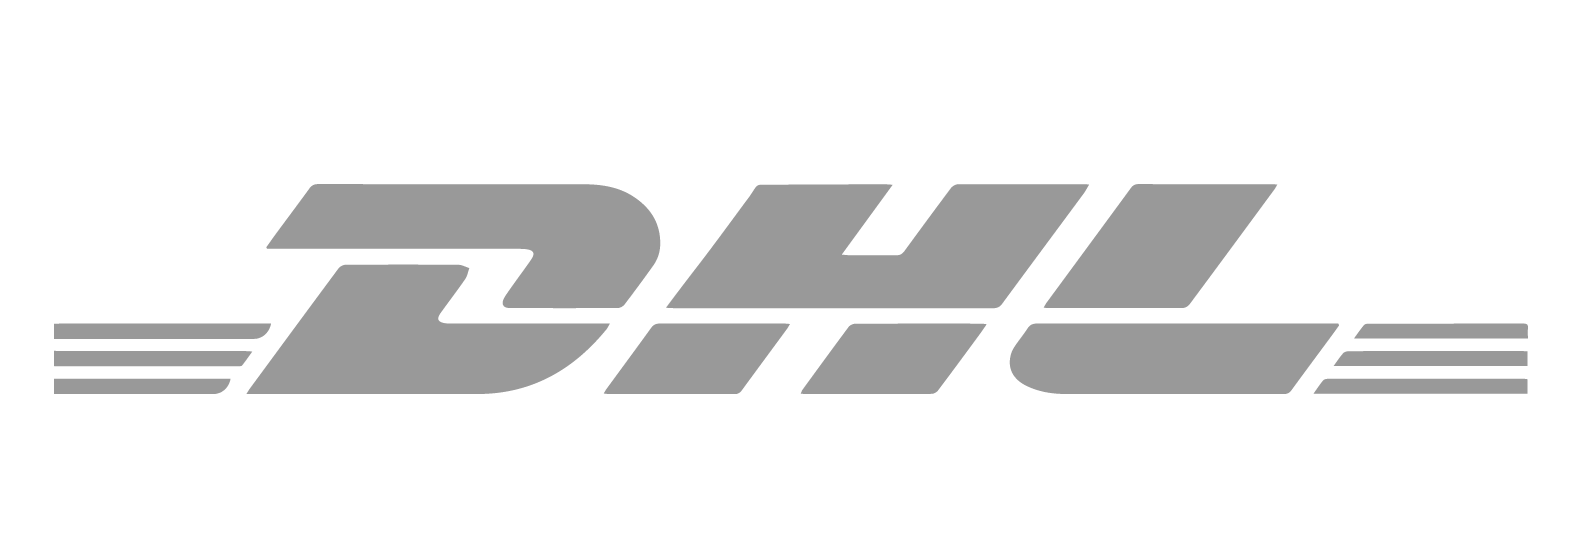 DHL logo-03